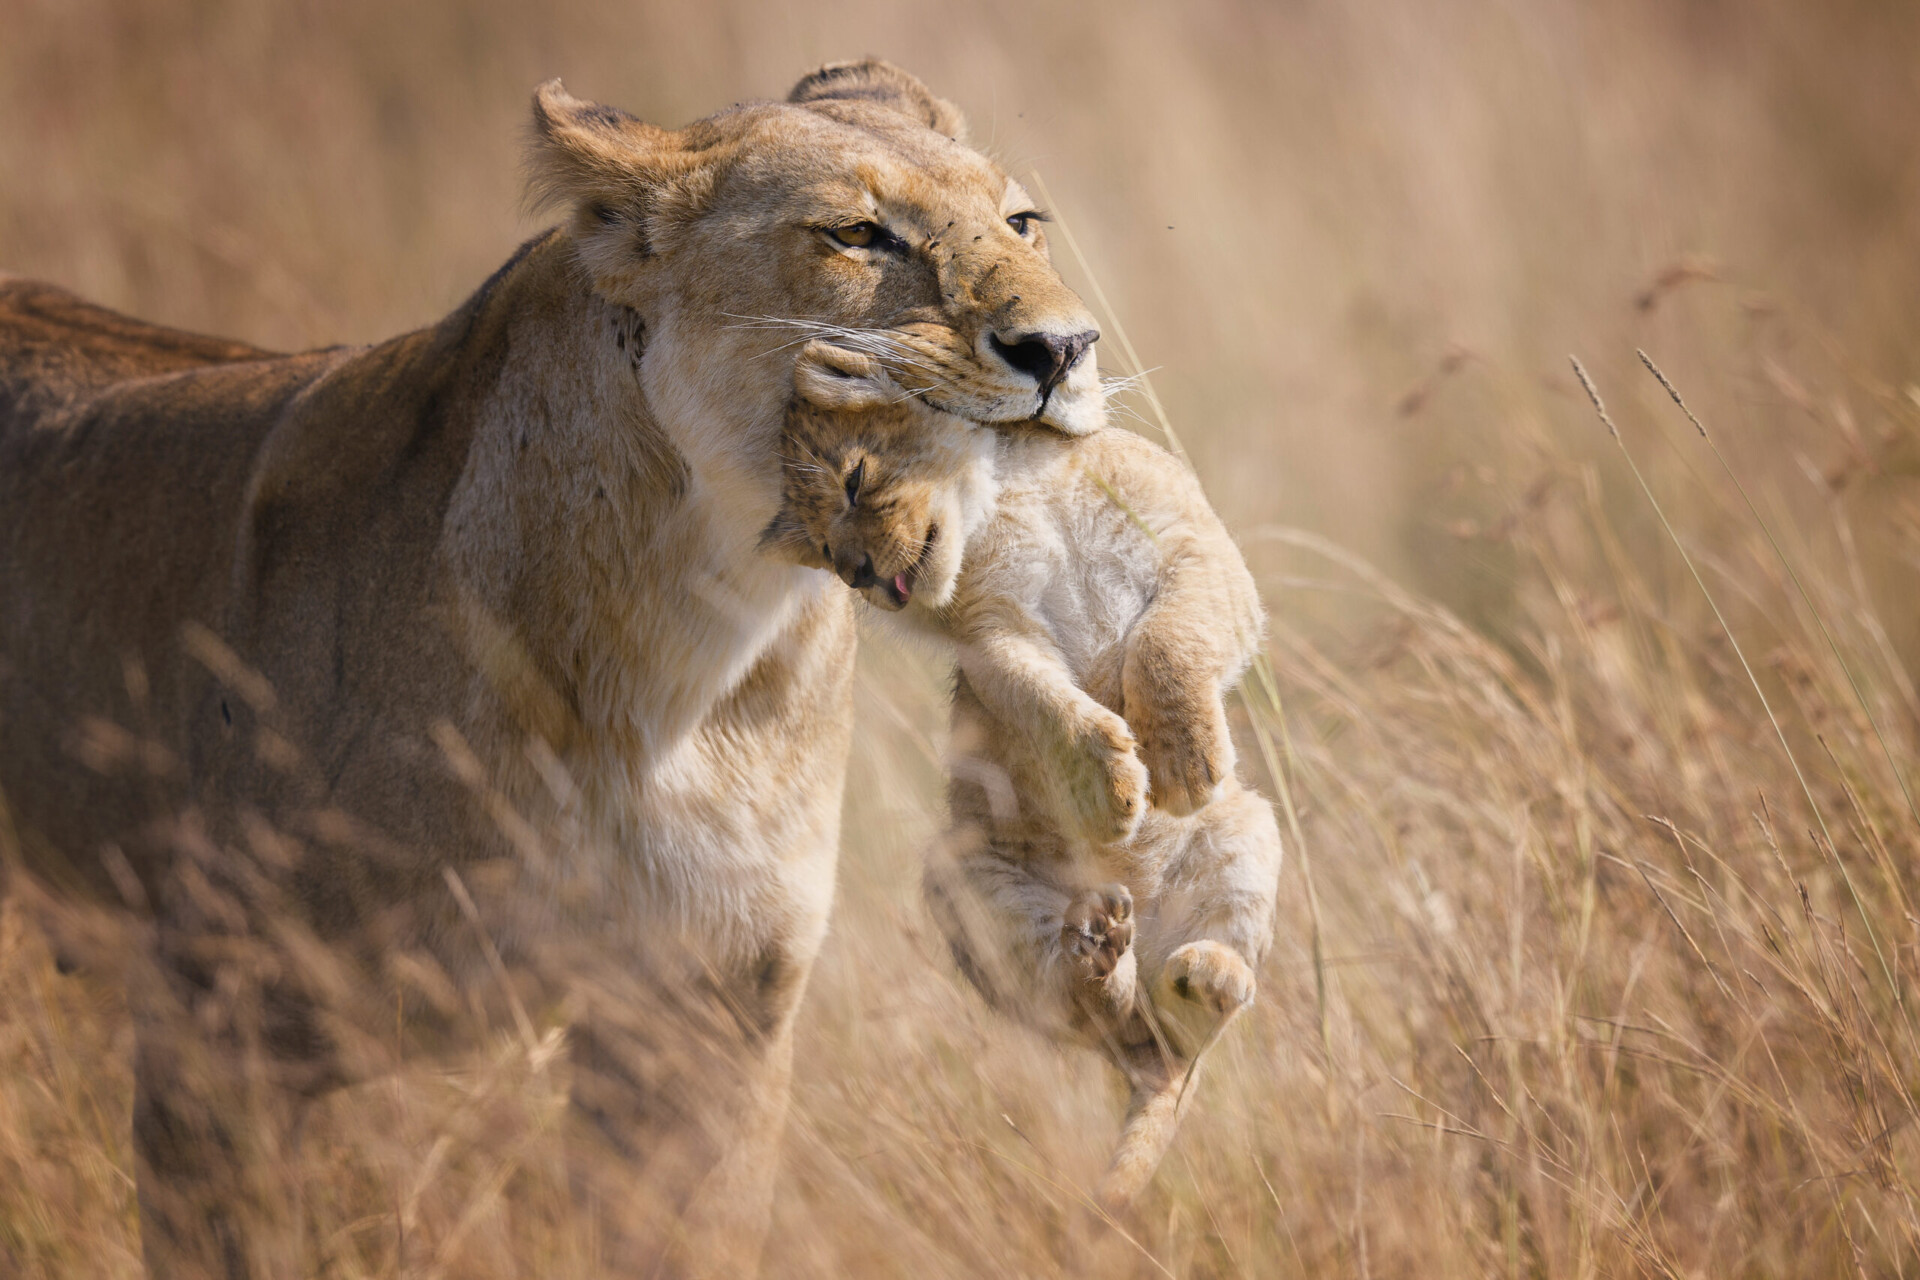 newbig5-Vicki-Jauron.-African-Lions.-Status-Vulnerable.-Maasai-Mara-National-Reserve-Kenya-960x640@2x.jpg